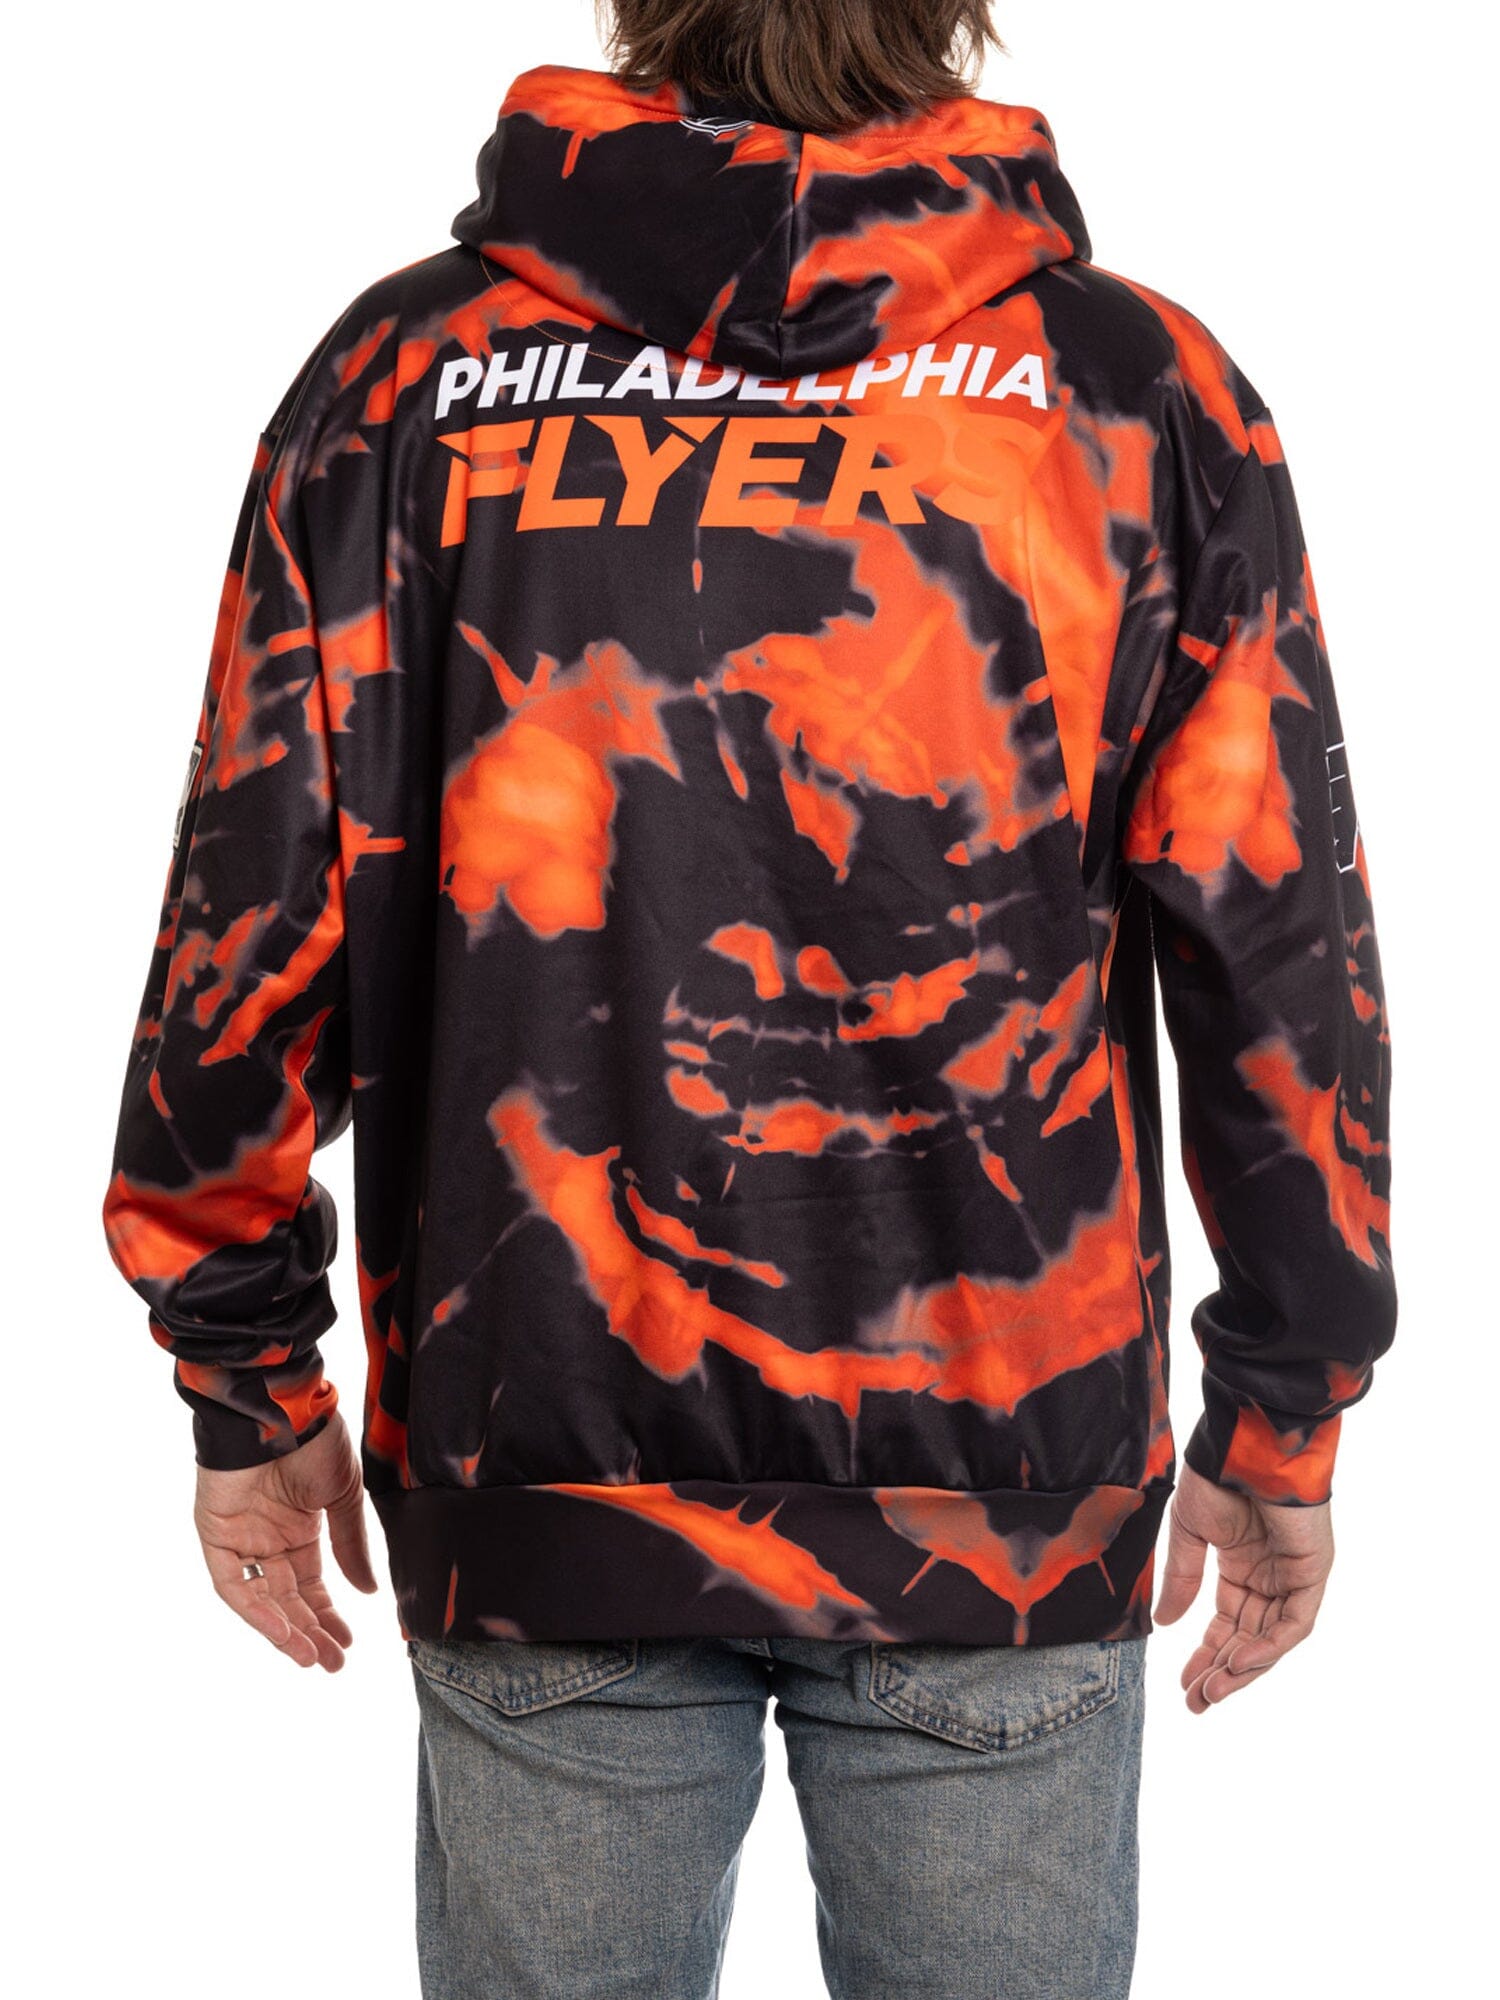 Philadelphia Flyers Hockey Hoodie - BACK